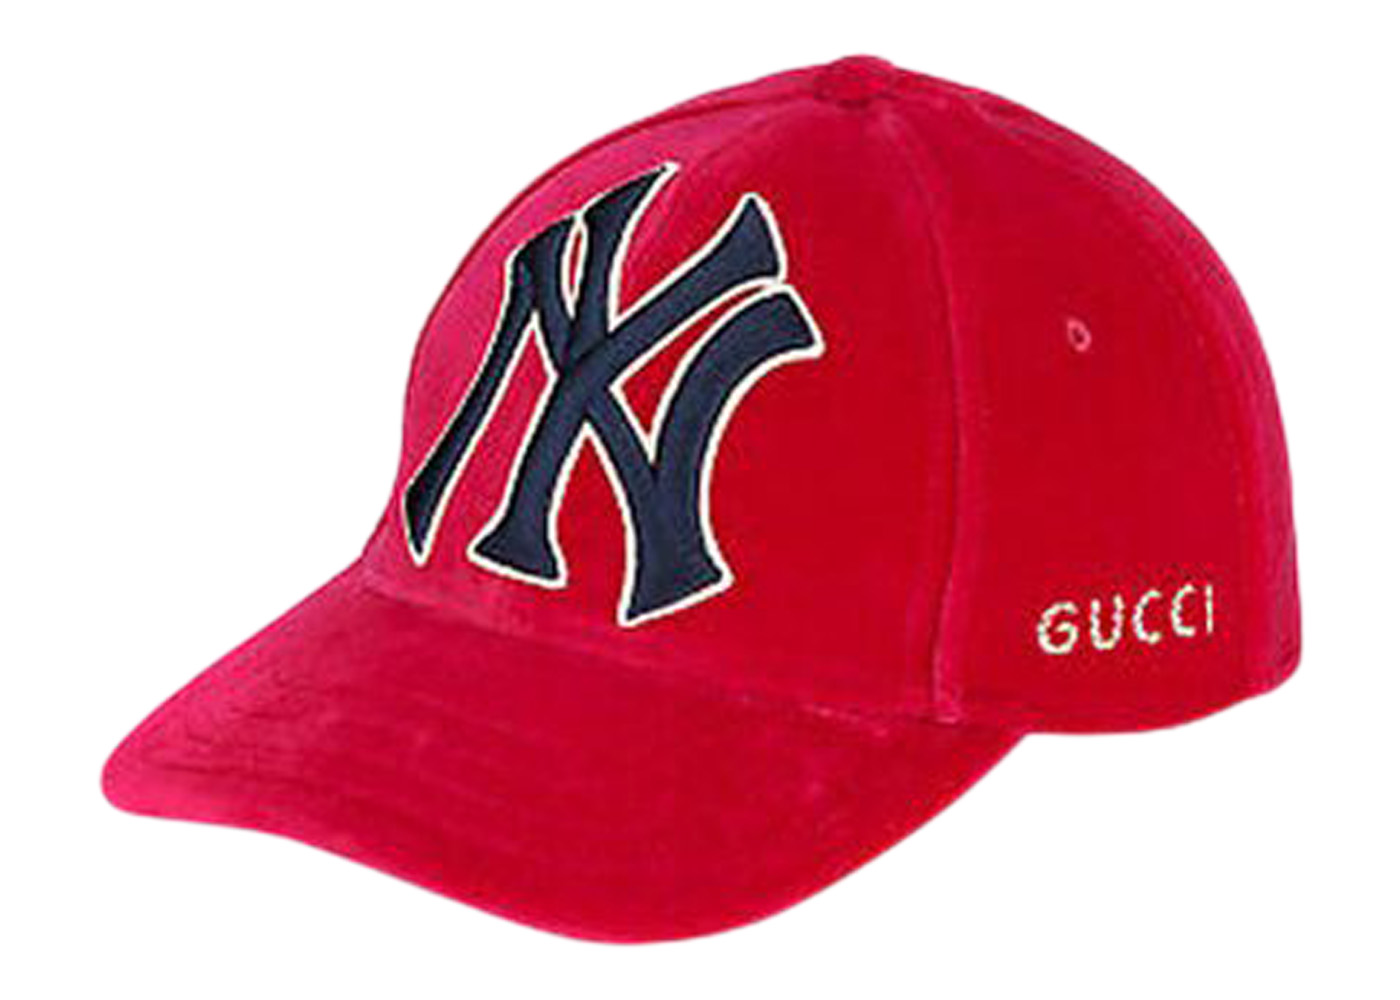 Gucci NY Yankees Velvet Cap Pink/Navy/White - US